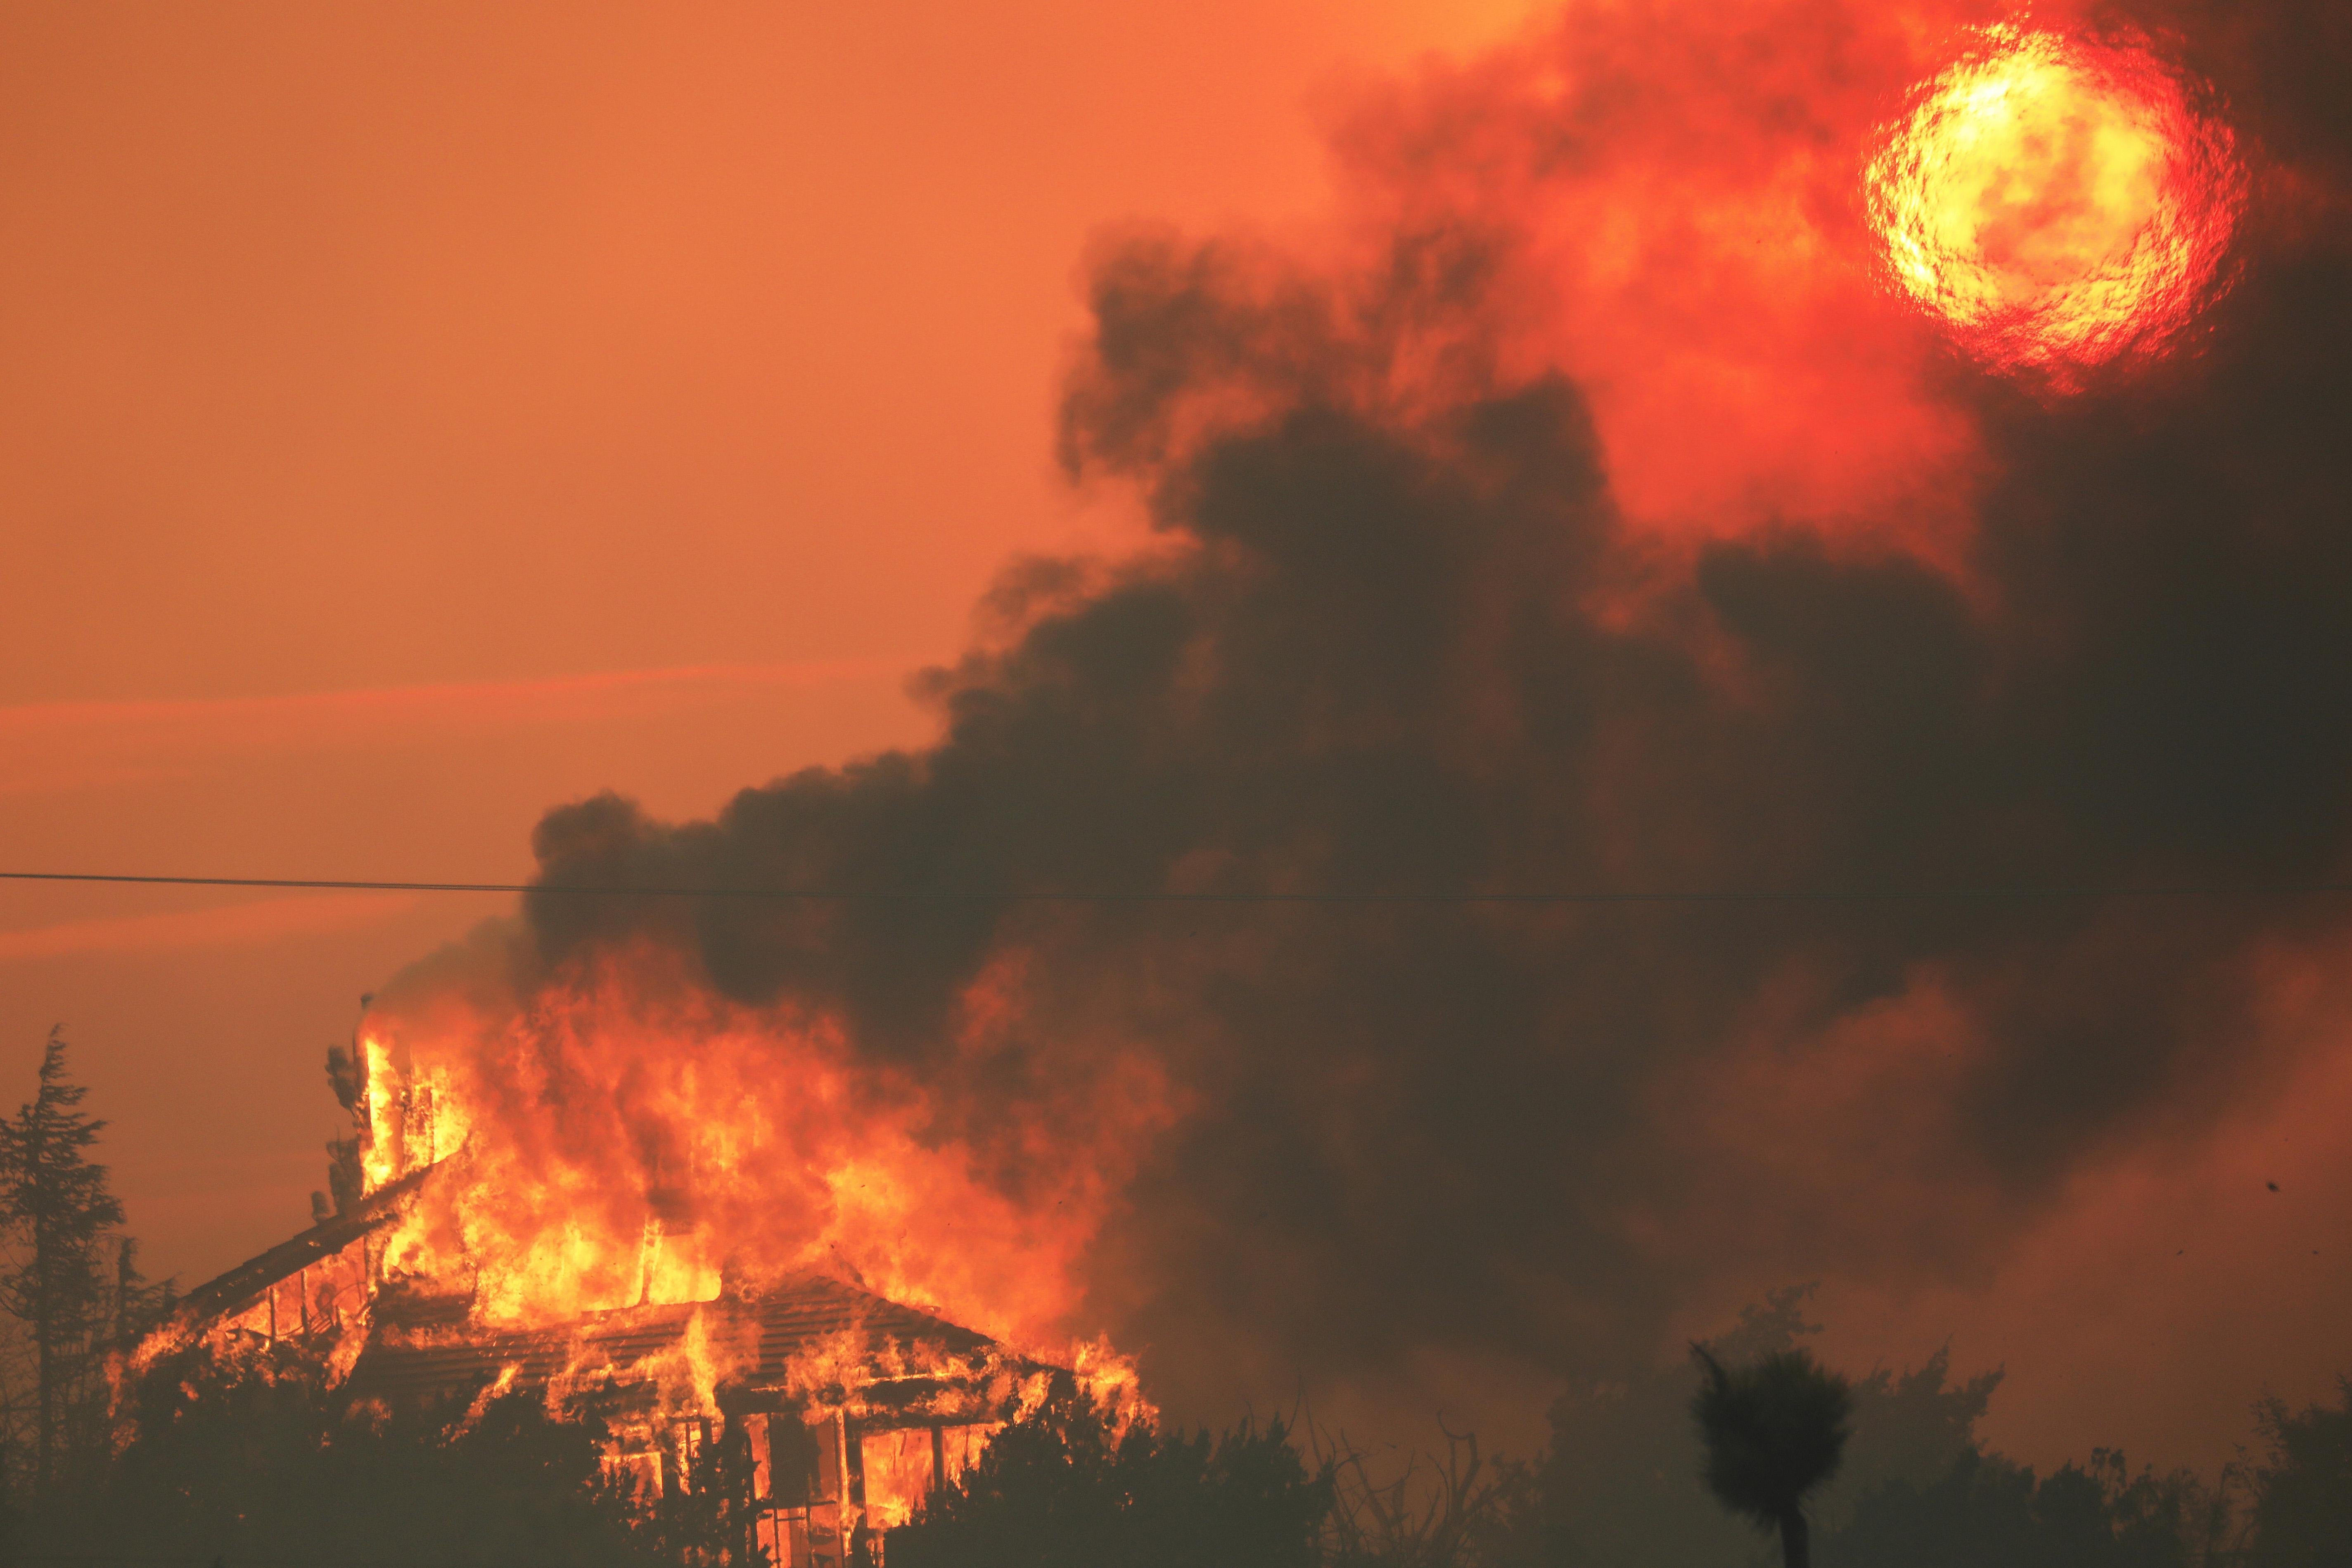 A home is seen burning as black smoke drifts toward the sky.